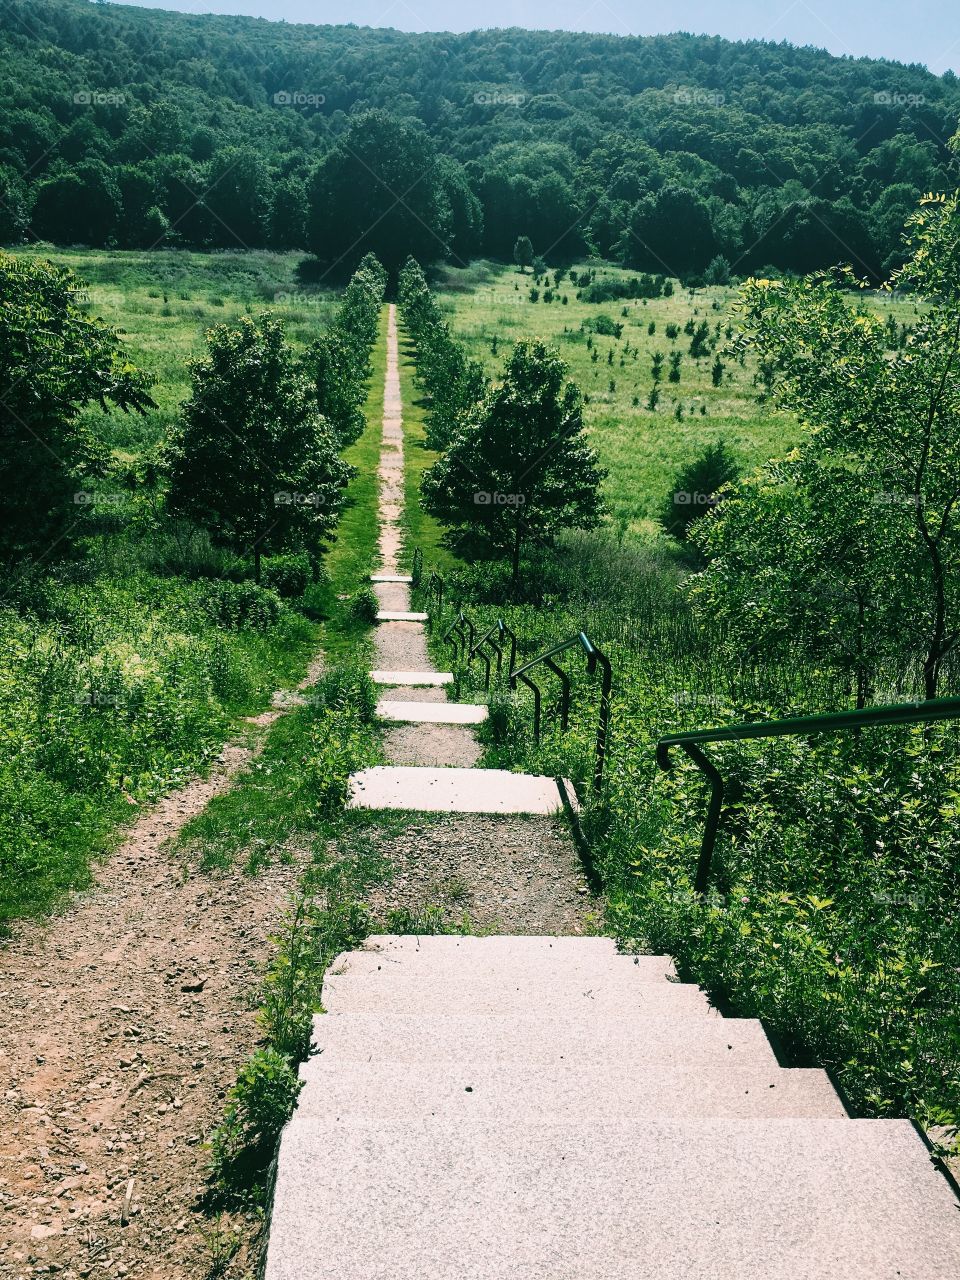 Stairway to nature